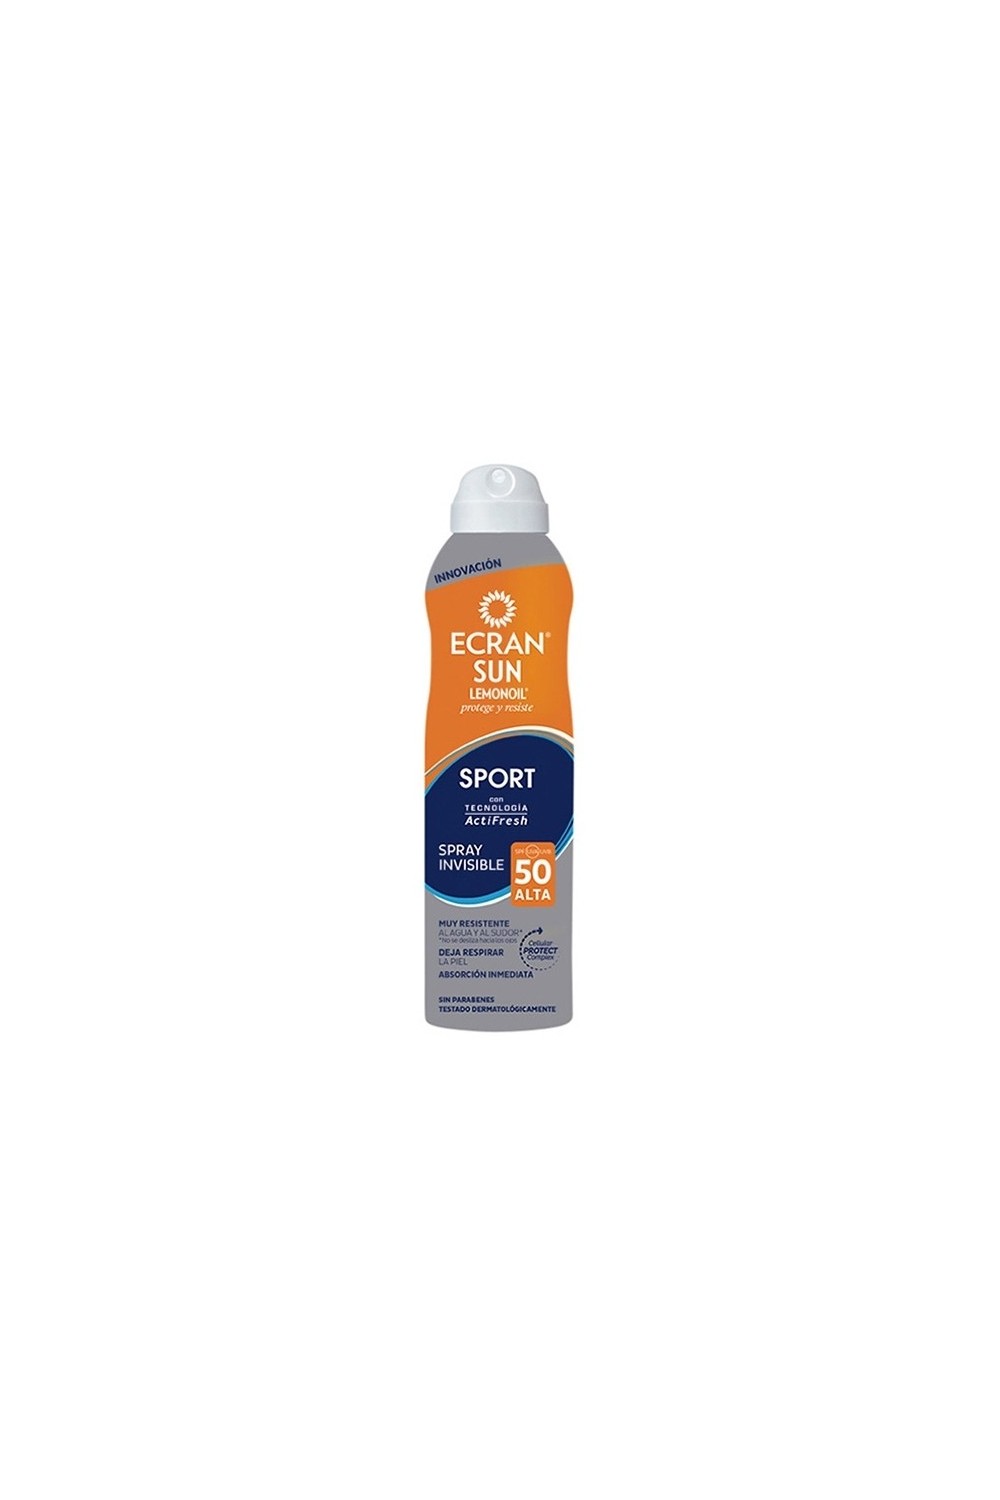 Ecran Sun Lemonoil Sport Invisible Spray Spf50 250ml